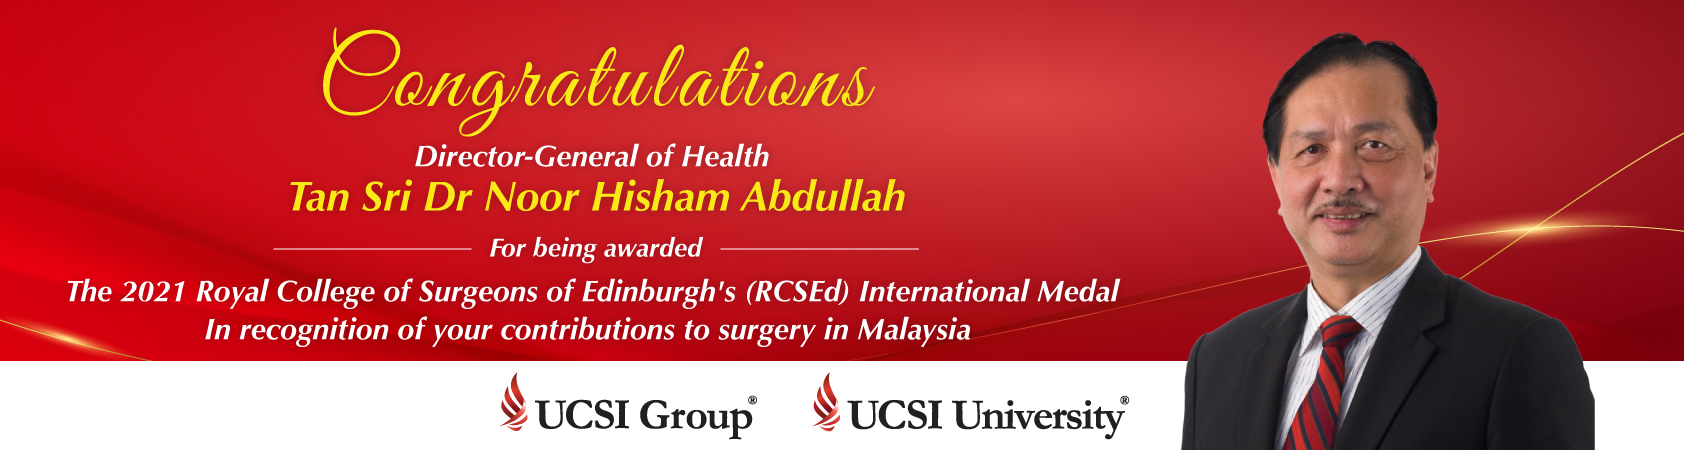 Congratulate Dr Noor Hisham